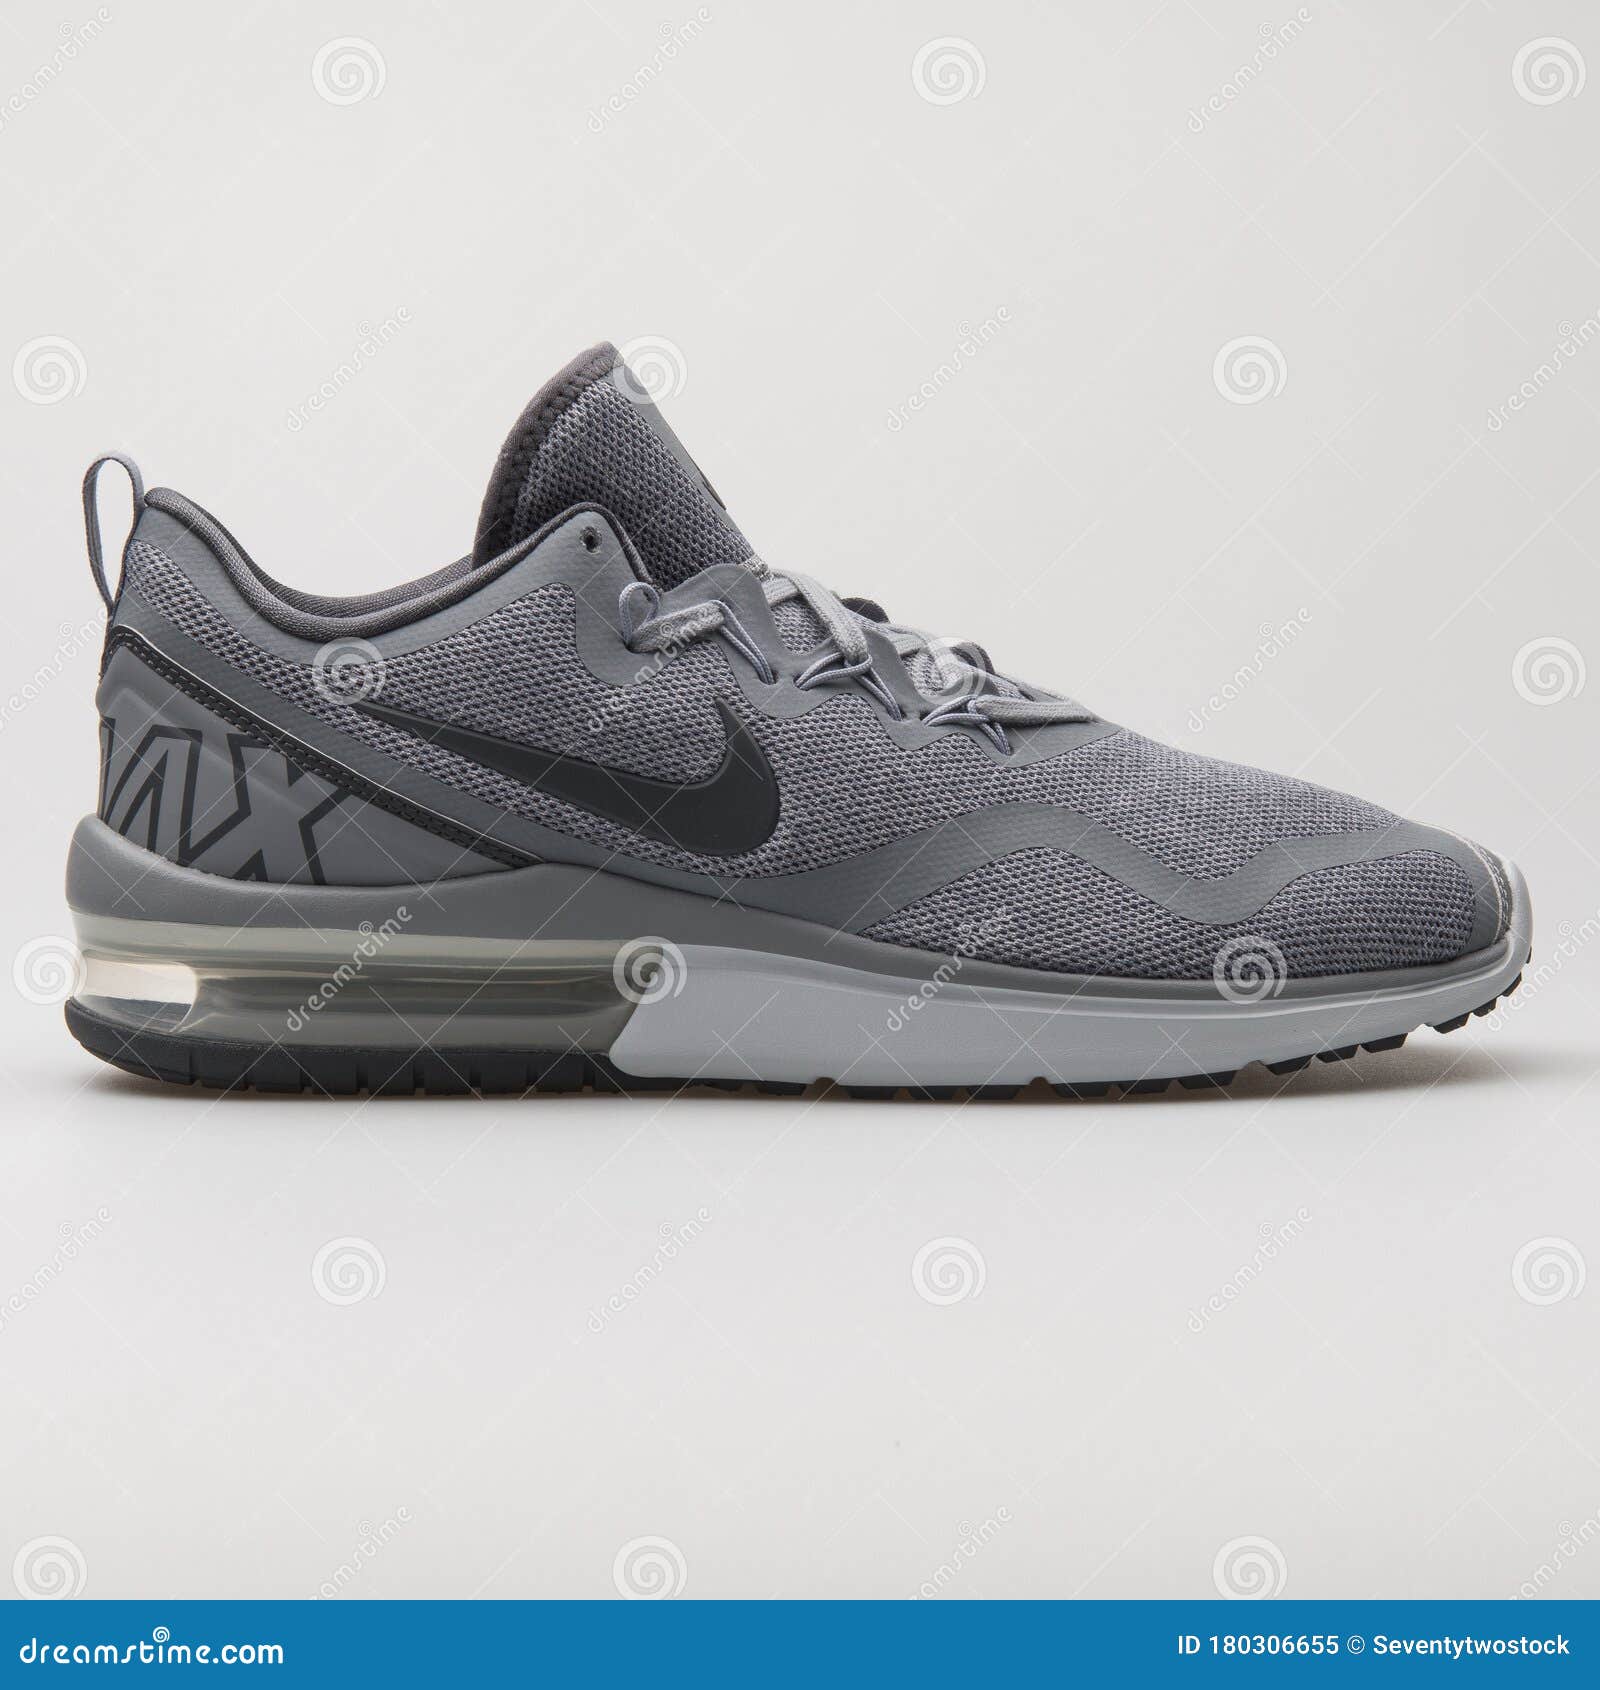 Nike Air Max Fury Sneaker Image - Image of side, training: 180306655